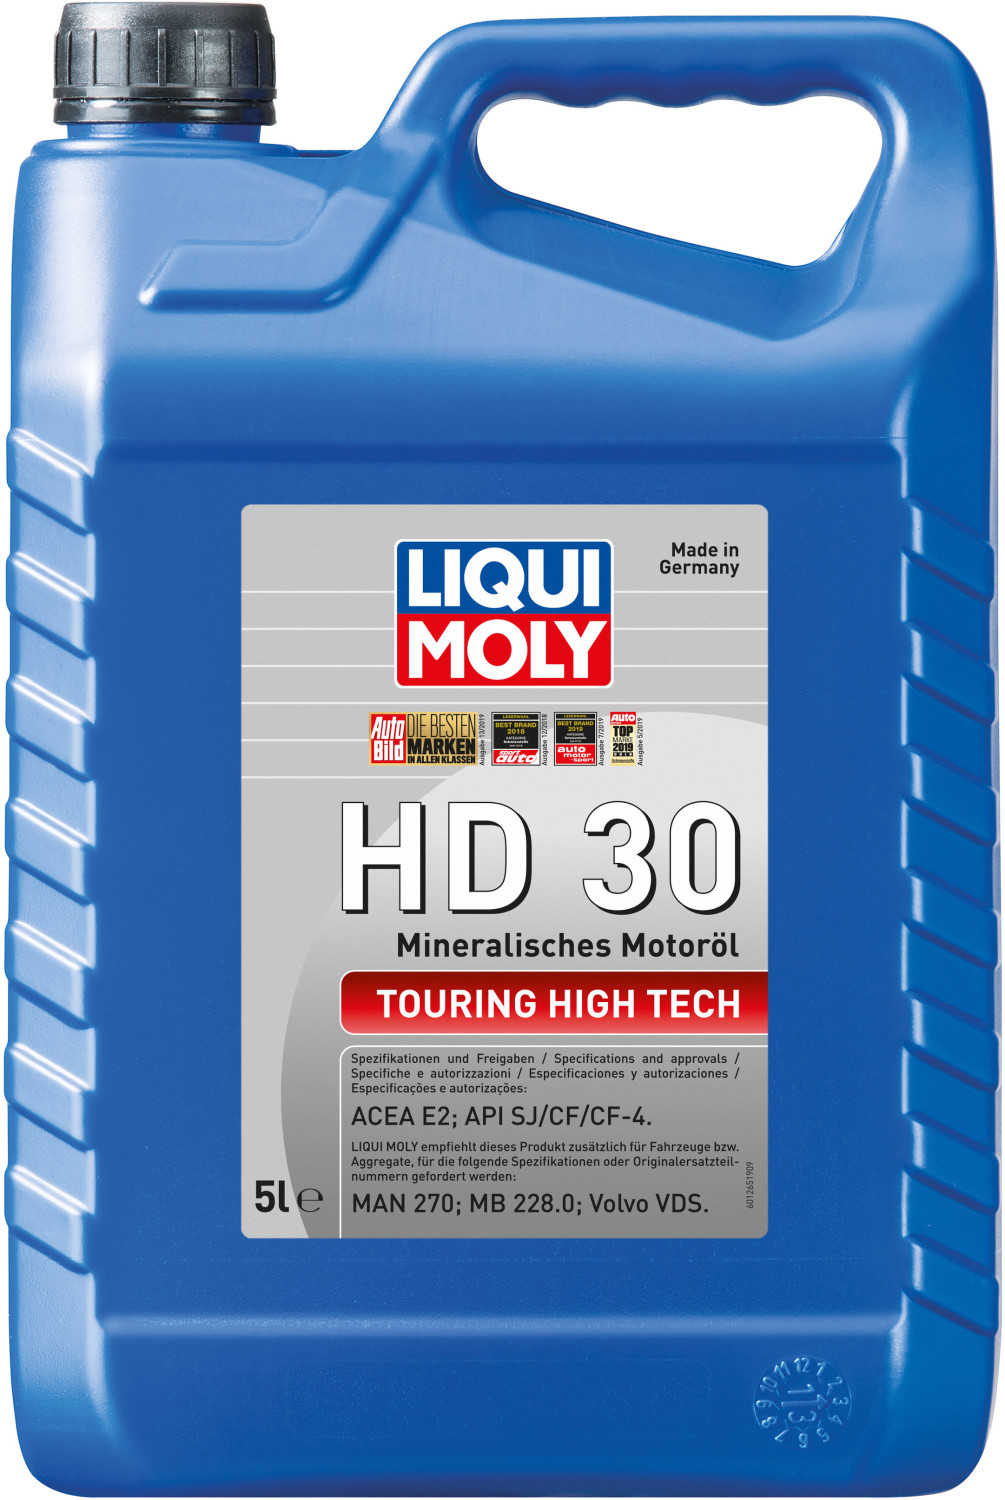 LIQUI MOLY Touring High Tech HD 30 (5 l)